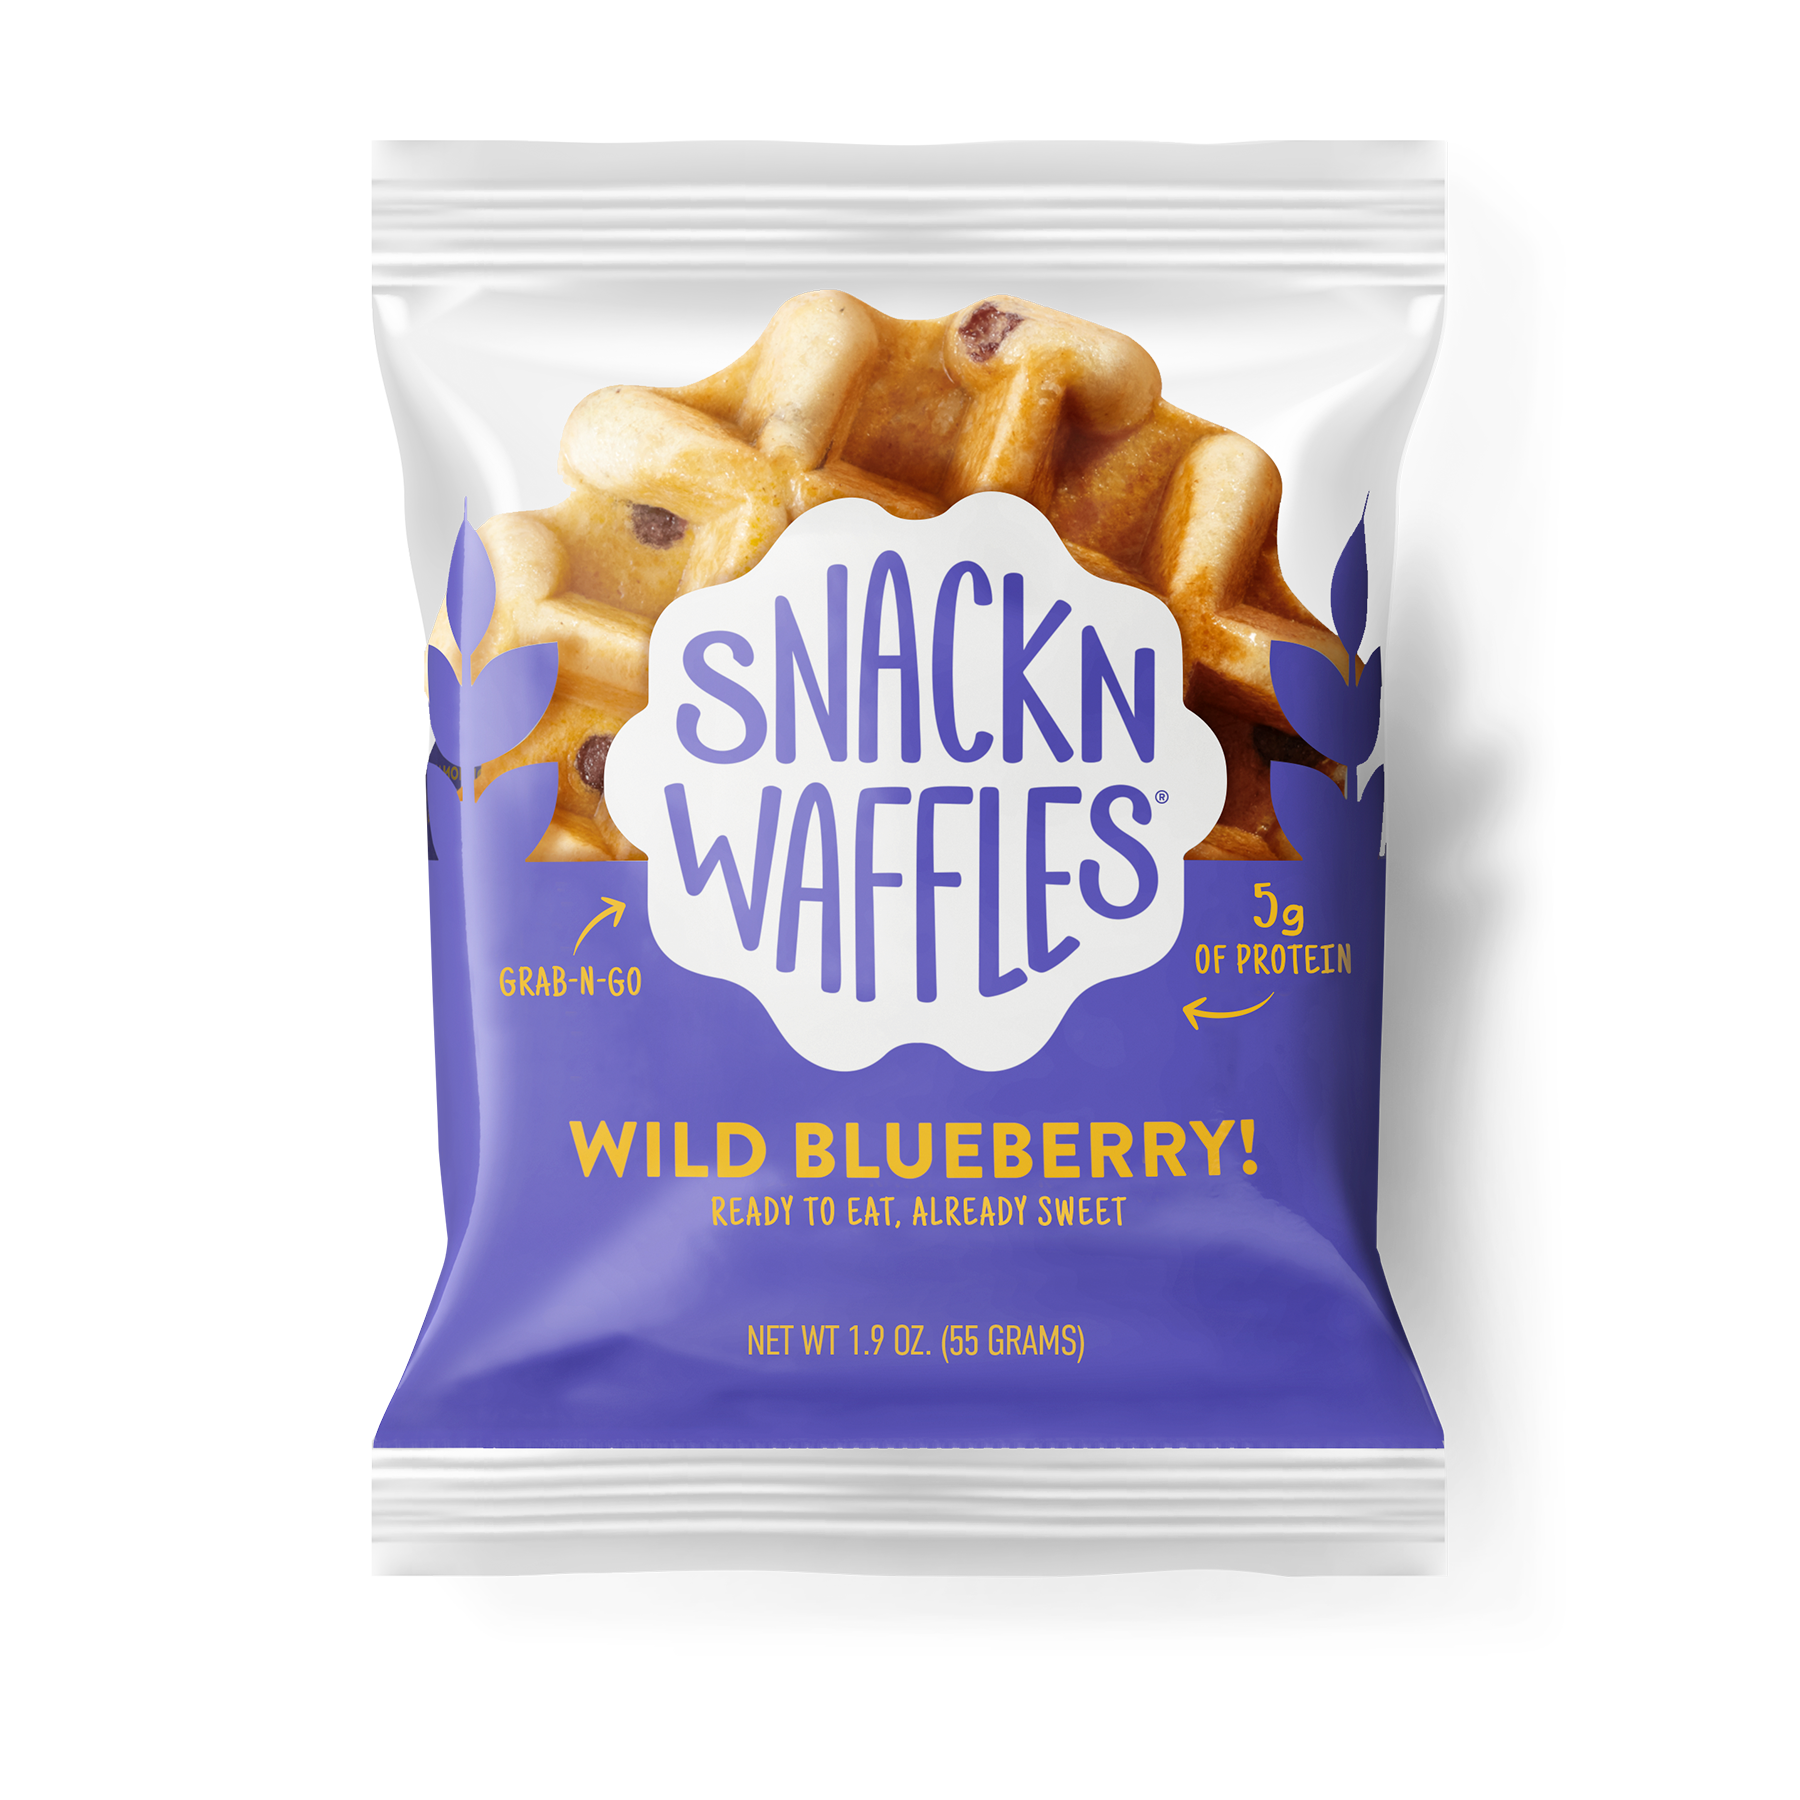 Wild Blueberry! – Snack'n Waffles